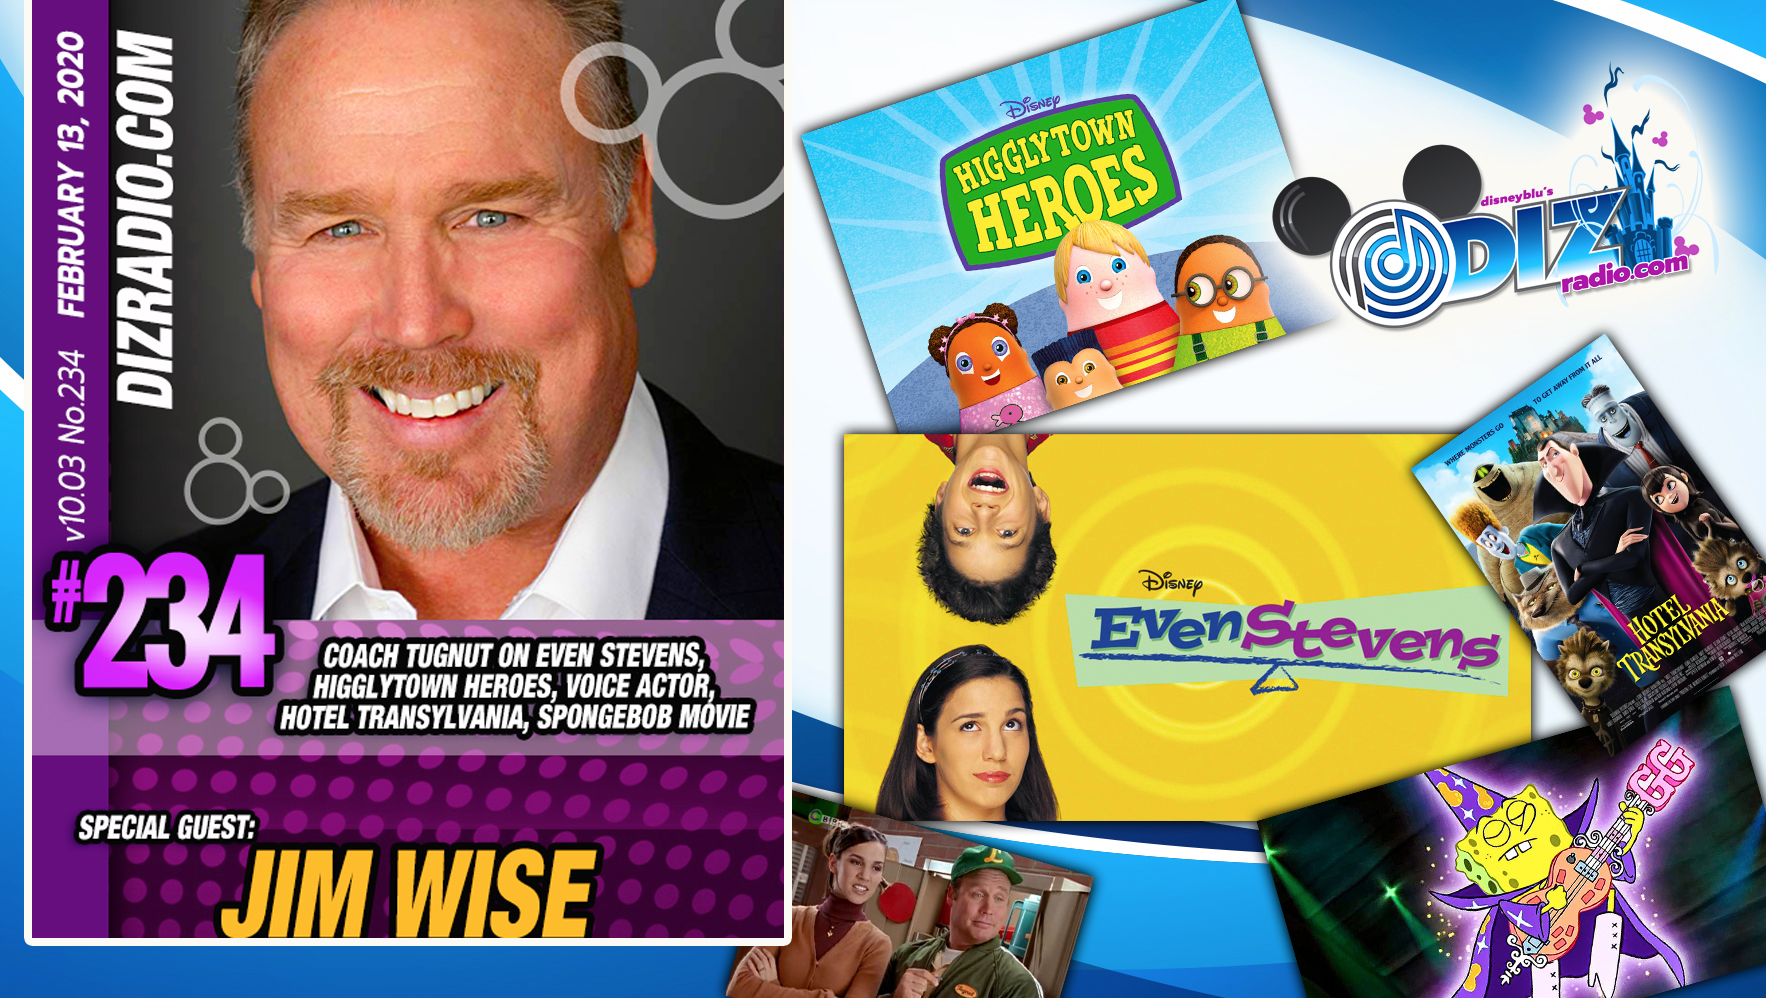 DisneyBlu's DizRadio Disney on Demand Show #234 w/ Guest JIM WISE (Even Stevens, Higglytown Heroes, Spongebob The Movie, Jay Leno Show, Voice Actor, Writer, Comedian)